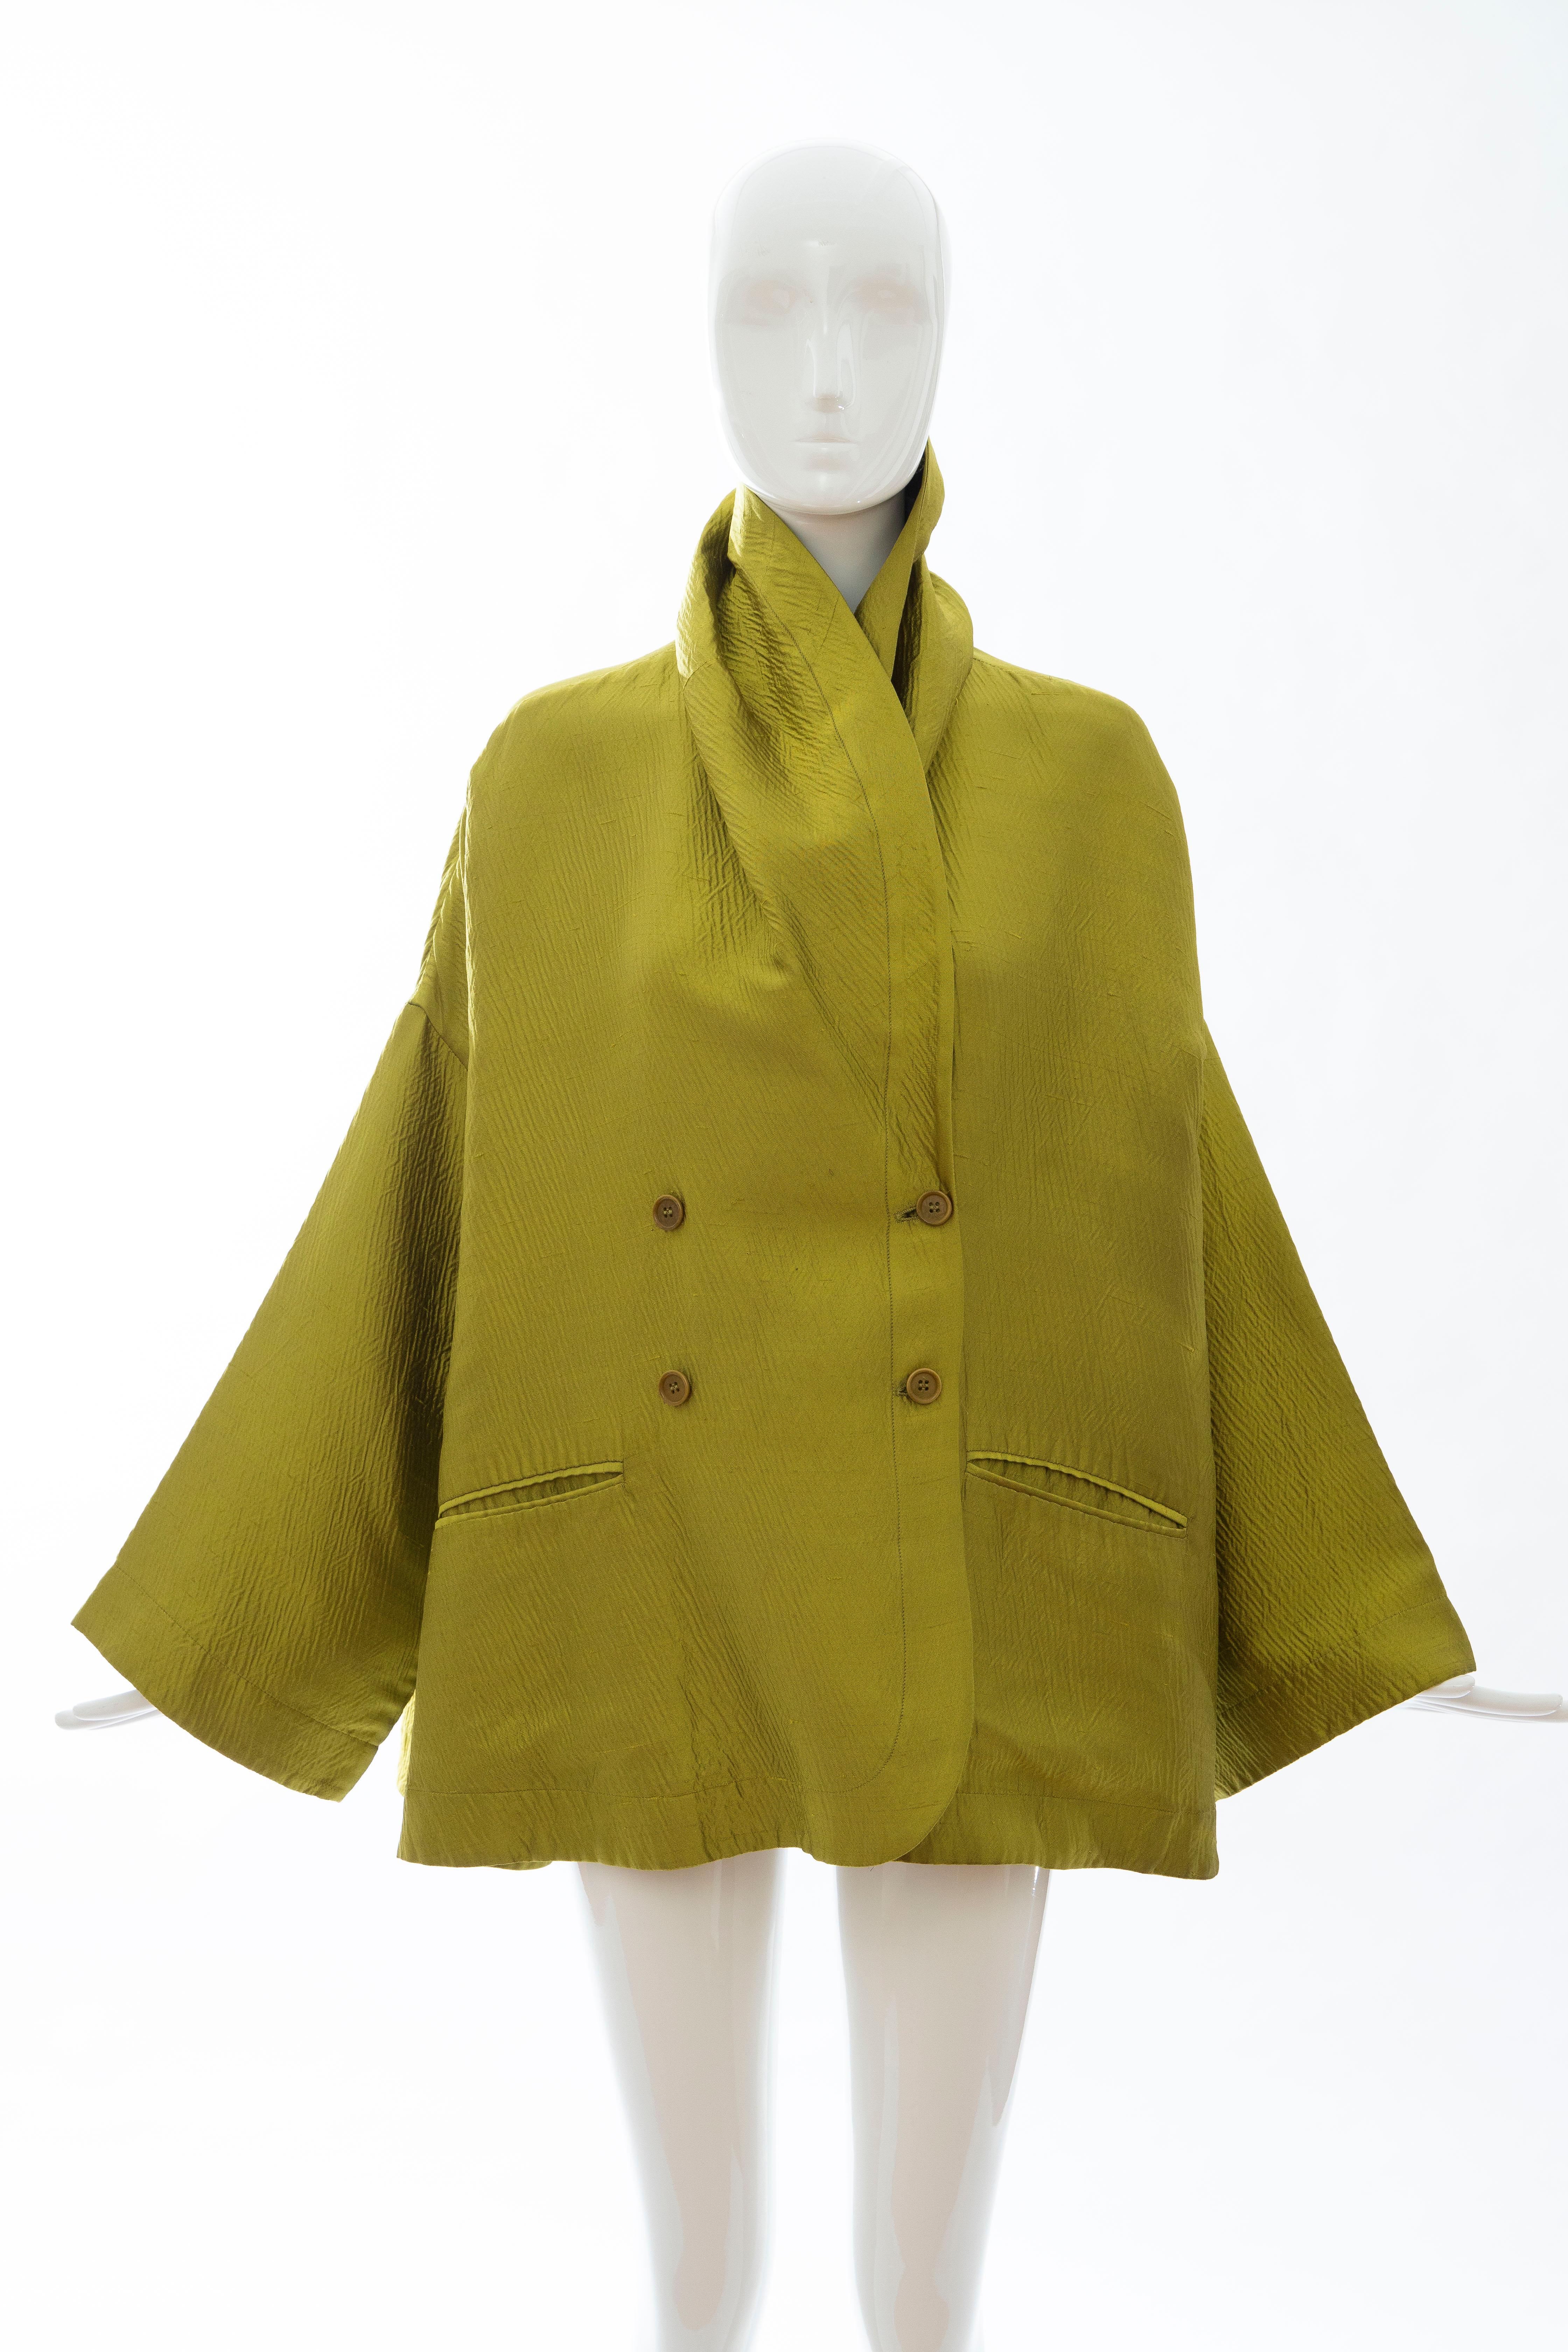 Women's Romeo Gigli Runway Silk Cotton Chartreuse Green Evening Jacket, Fall 1991